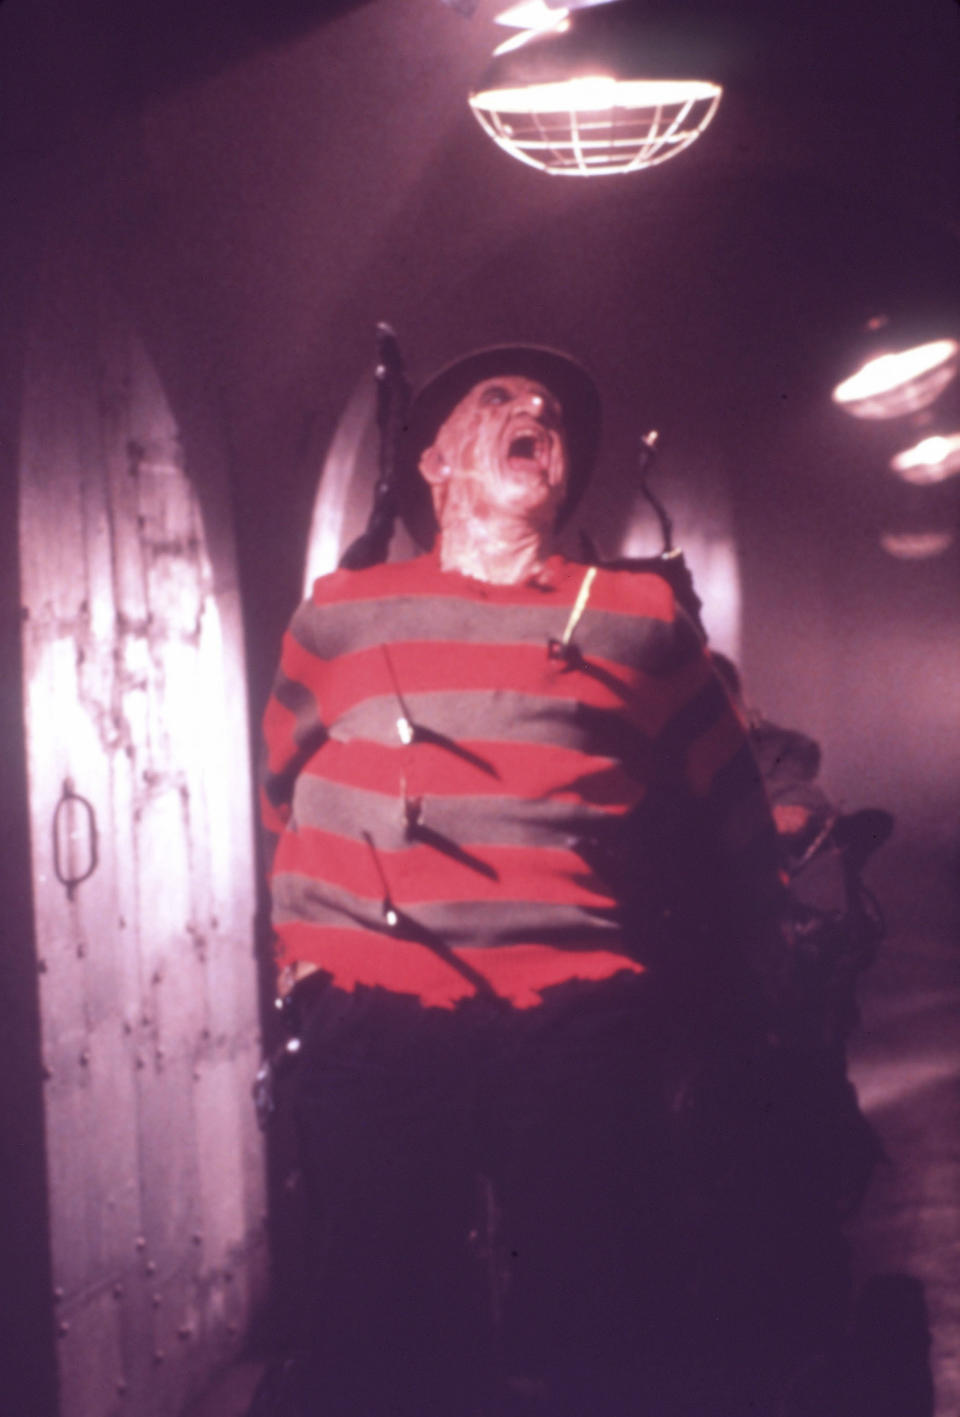 Watching "A Nightmare on Elm Street" burns 118 calories.  